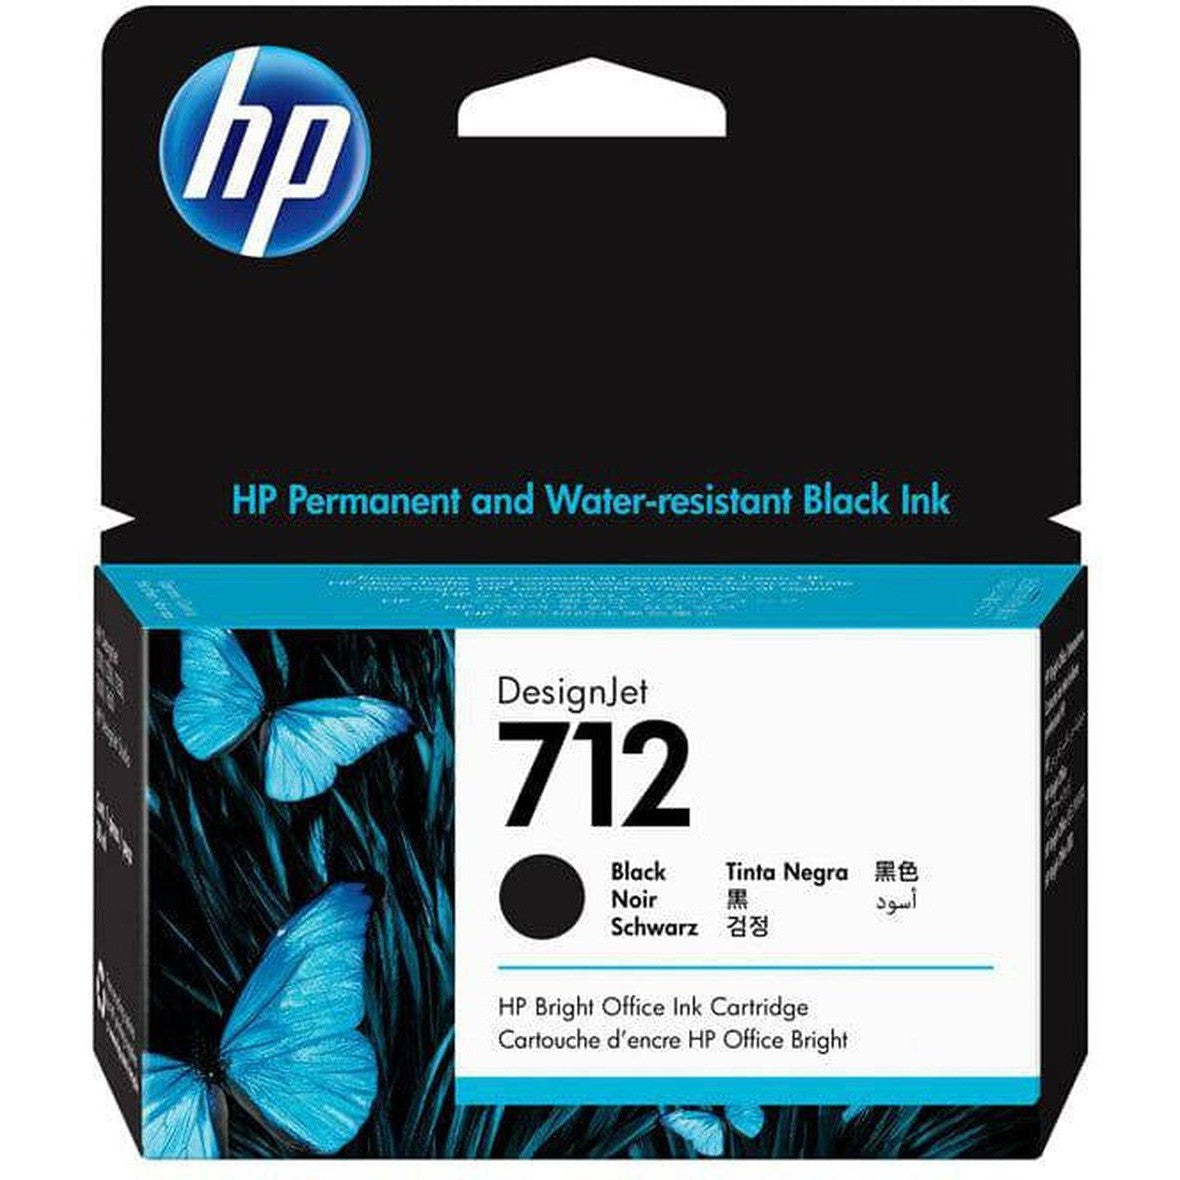 Hp 712 Black Designjet Ink Cartridge - 38 Ml / Black Color / Ink Cartridge-Inks And Toners-HP-Star Light Kuwait